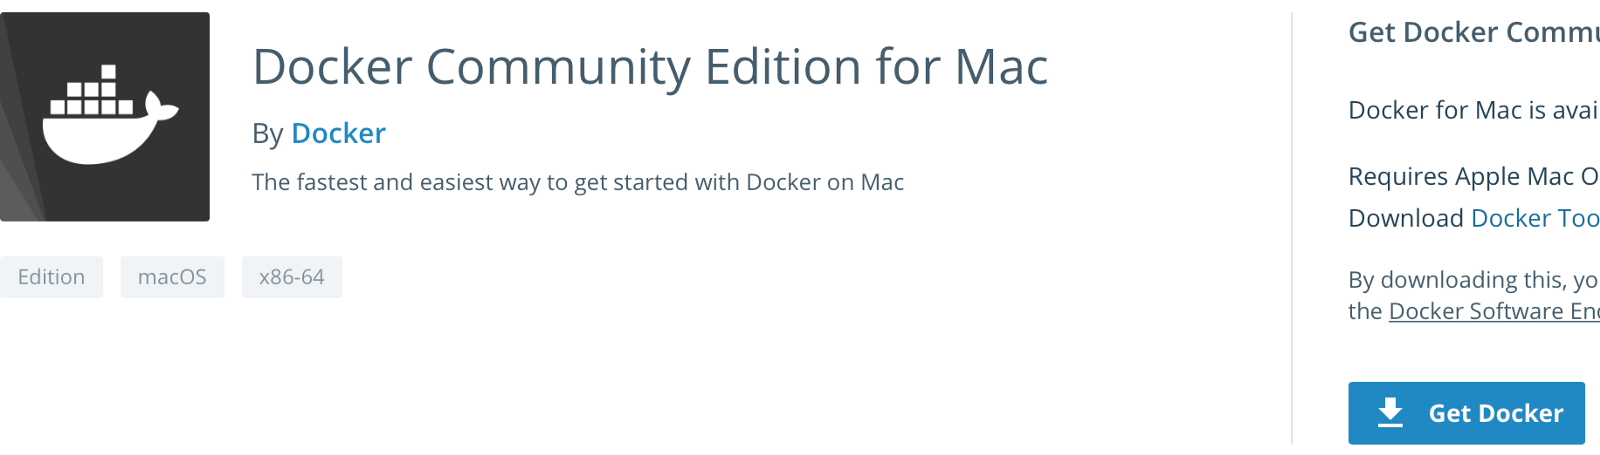 Visual Studio For Mac Docker